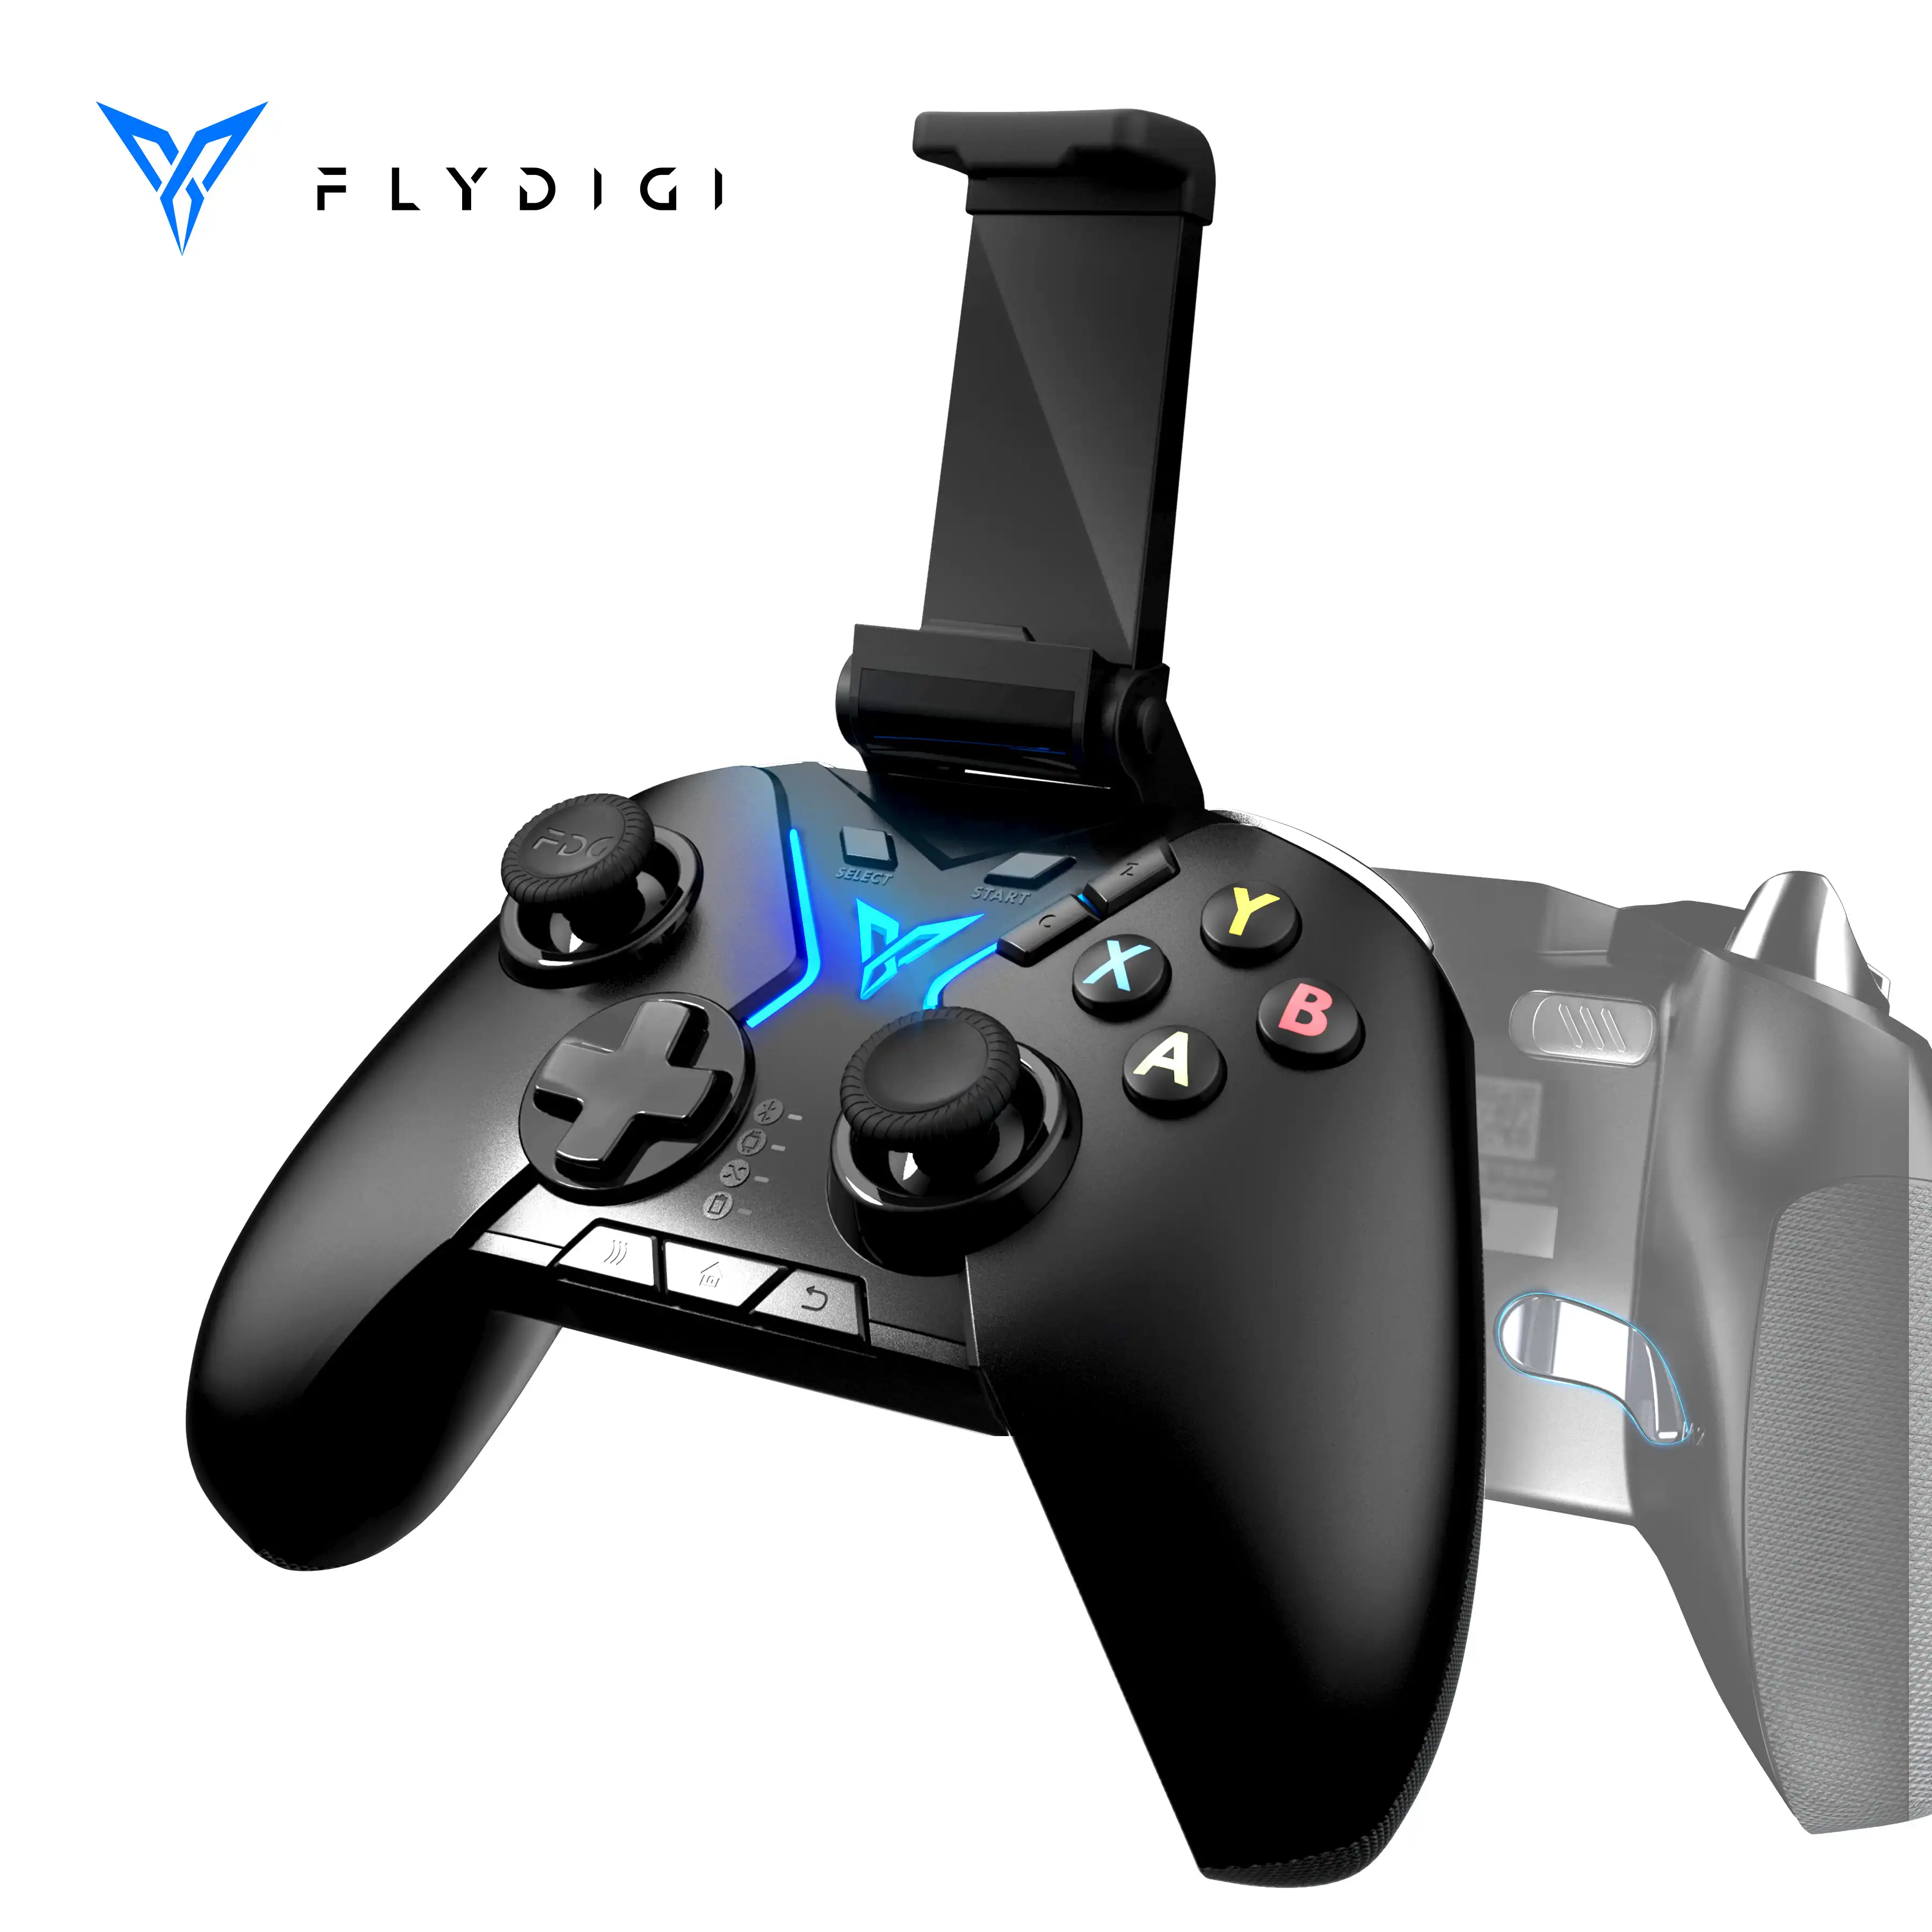 Flydigi Apex E スポーツ Bluetooth Pubg 携帯ワイヤレスゲームコントローラ 電話ホルダー ゲームパッド Pc 携帯電話用パッド Aliexpress